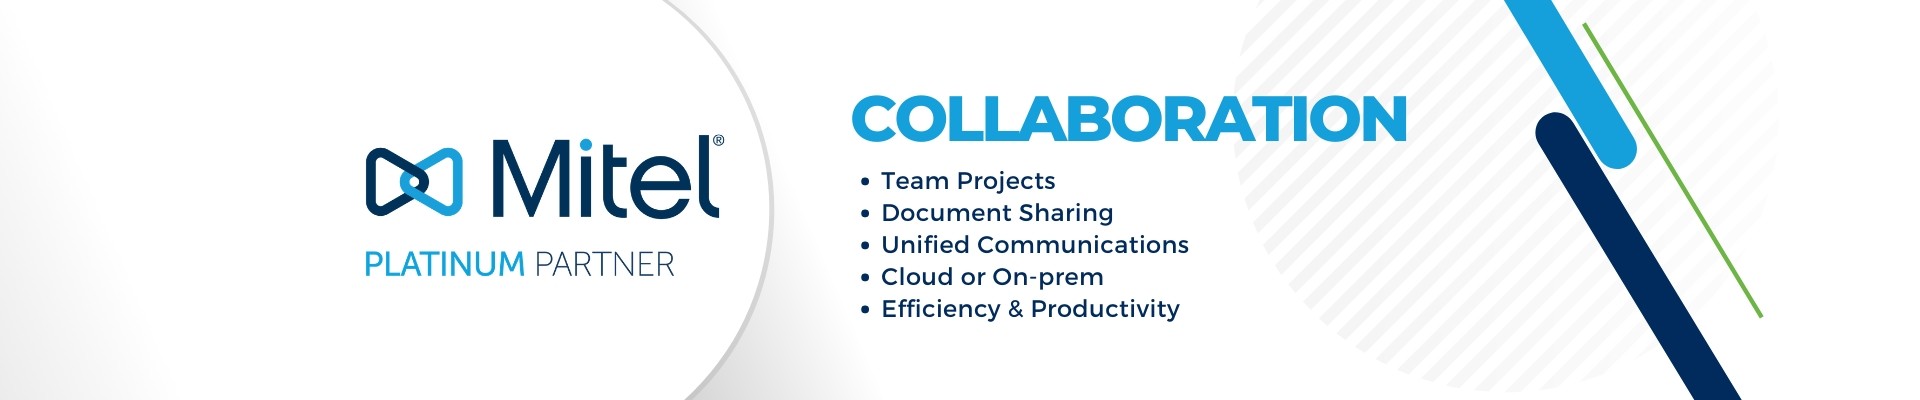 Mitel Collaboration slide